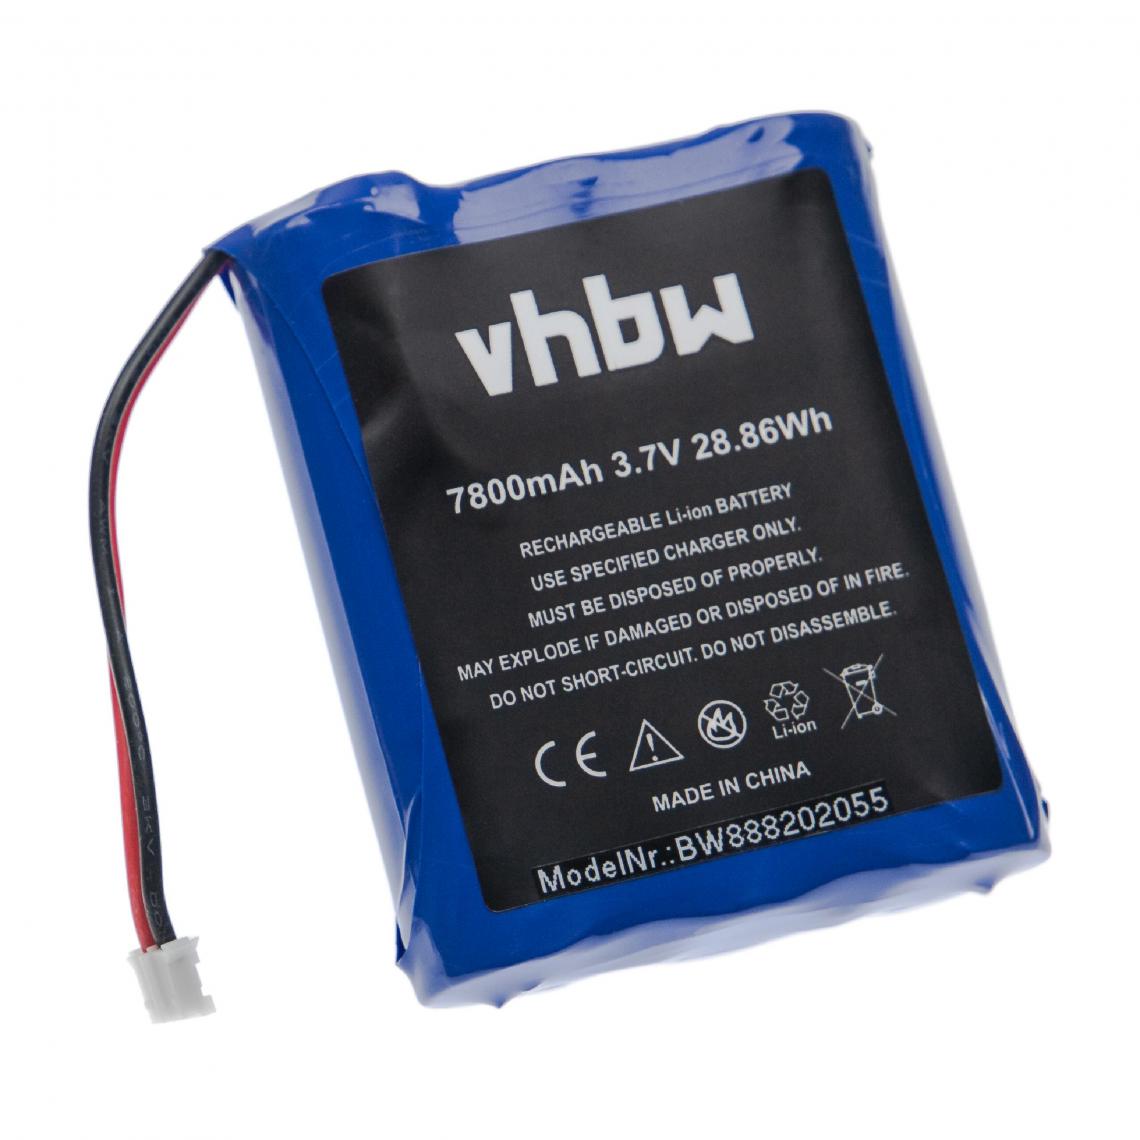 Vhbw - vhbw batterie compatible avec Technaxx TX-75 interphone, caméra d'interphone (7800mAh, 3,7V, Li-ion) - Autre appareil de mesure